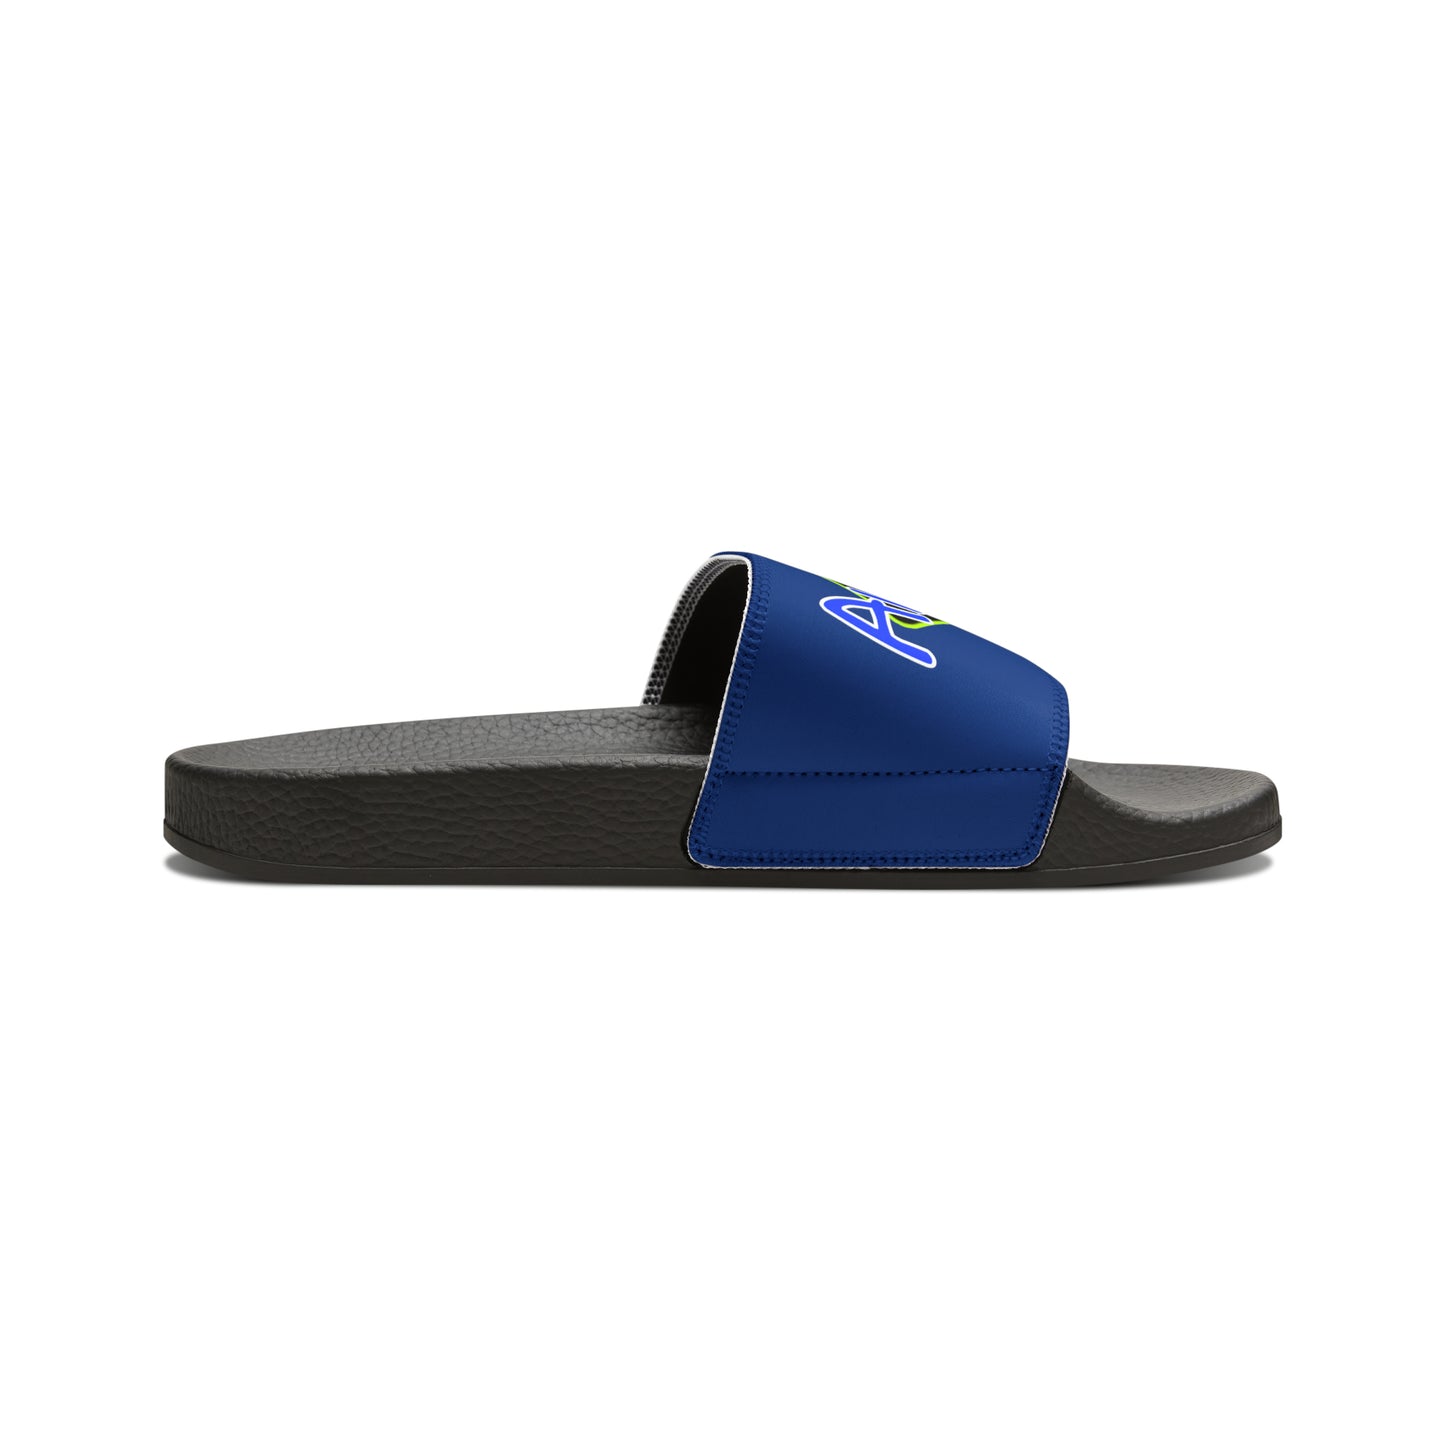 Men's Neon & Blue ALdre Slide Sandals (Blue)